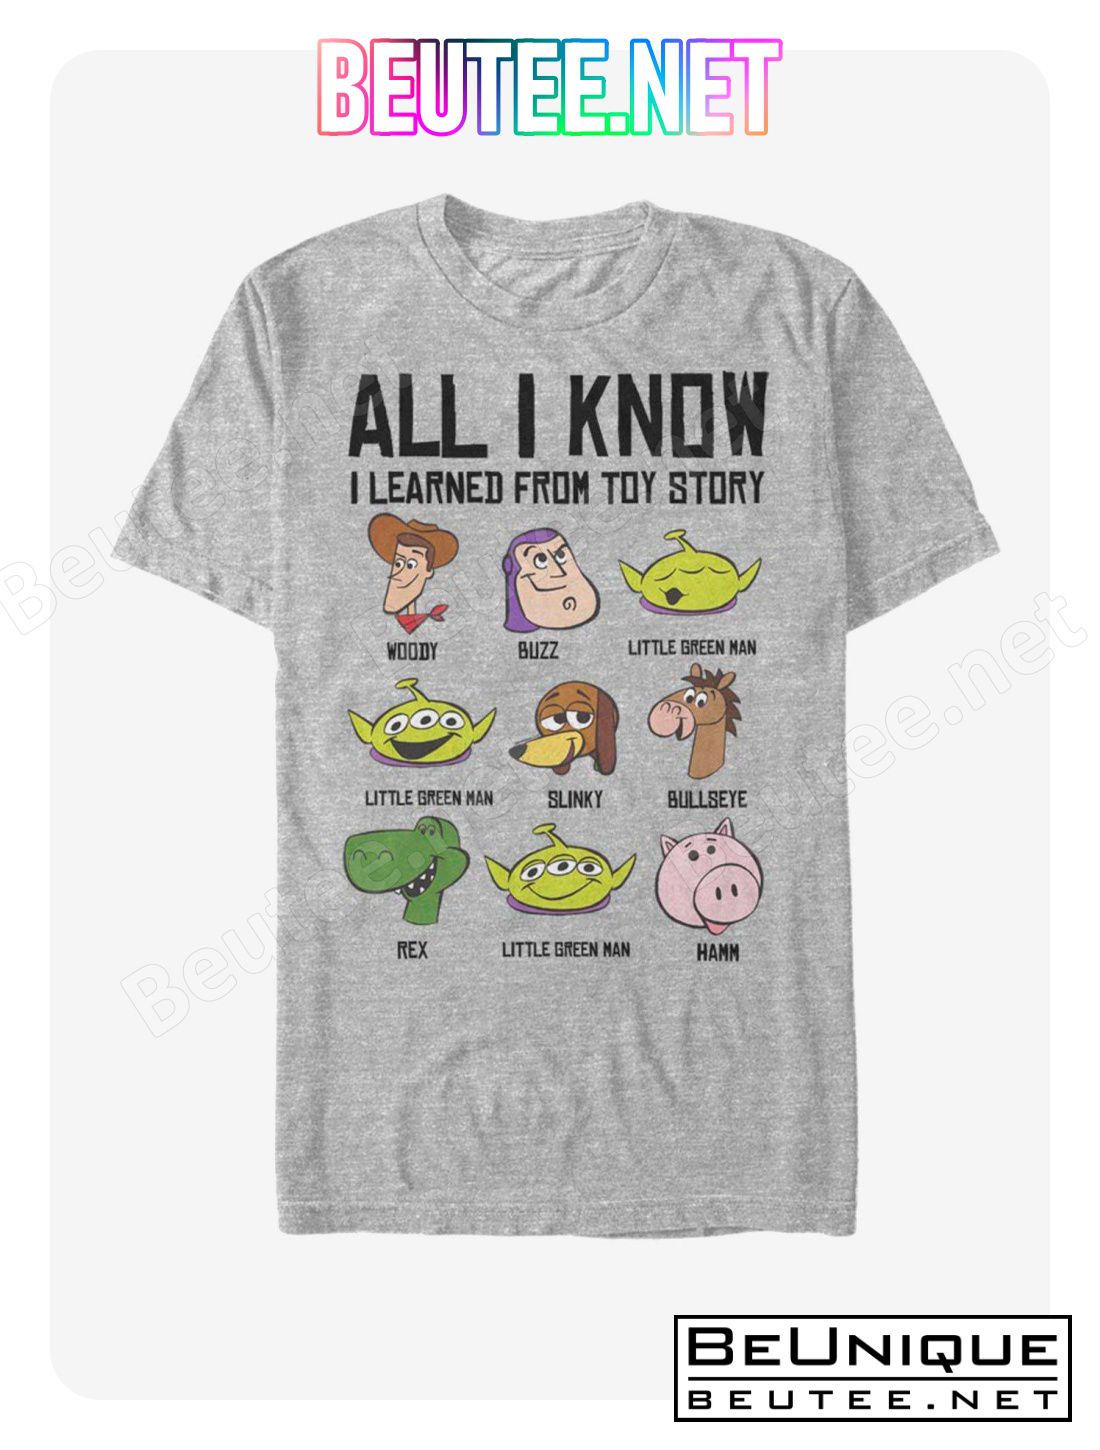 Disney Pixar Toy Story All I Know T-Shirt